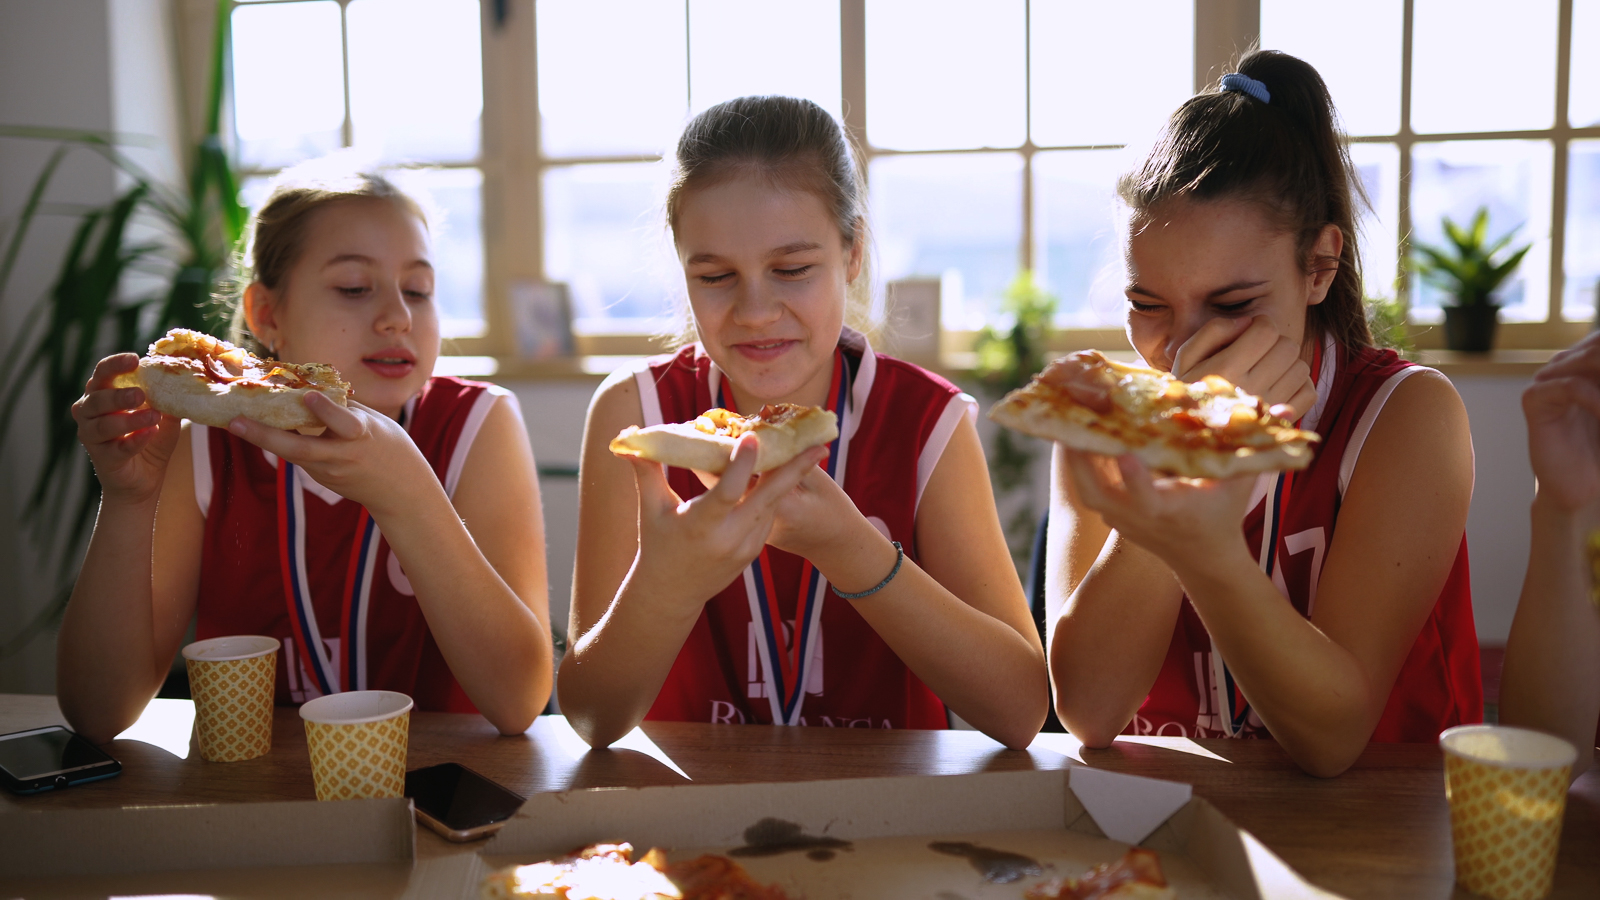 Team mates enjoying a pizza together